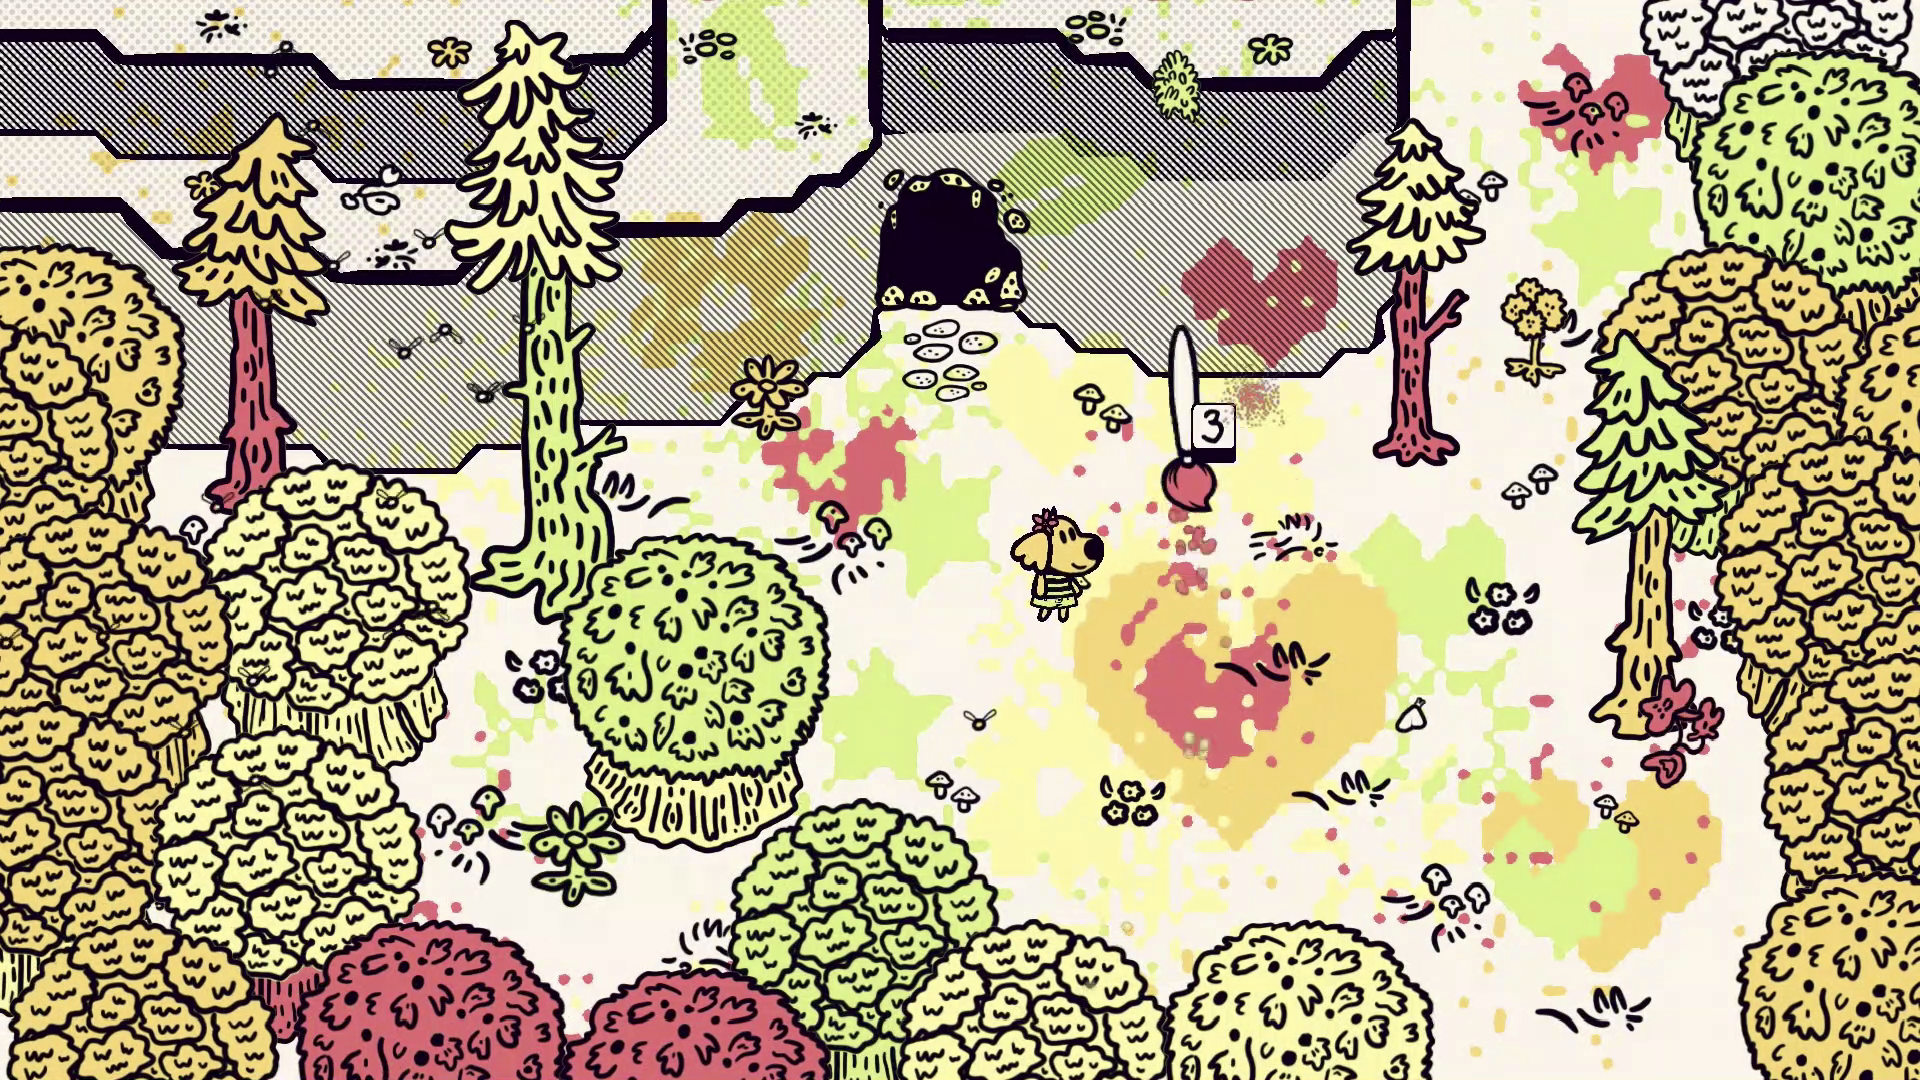 Chicory: A Colorful Tale - لقطة شاشة | PS5